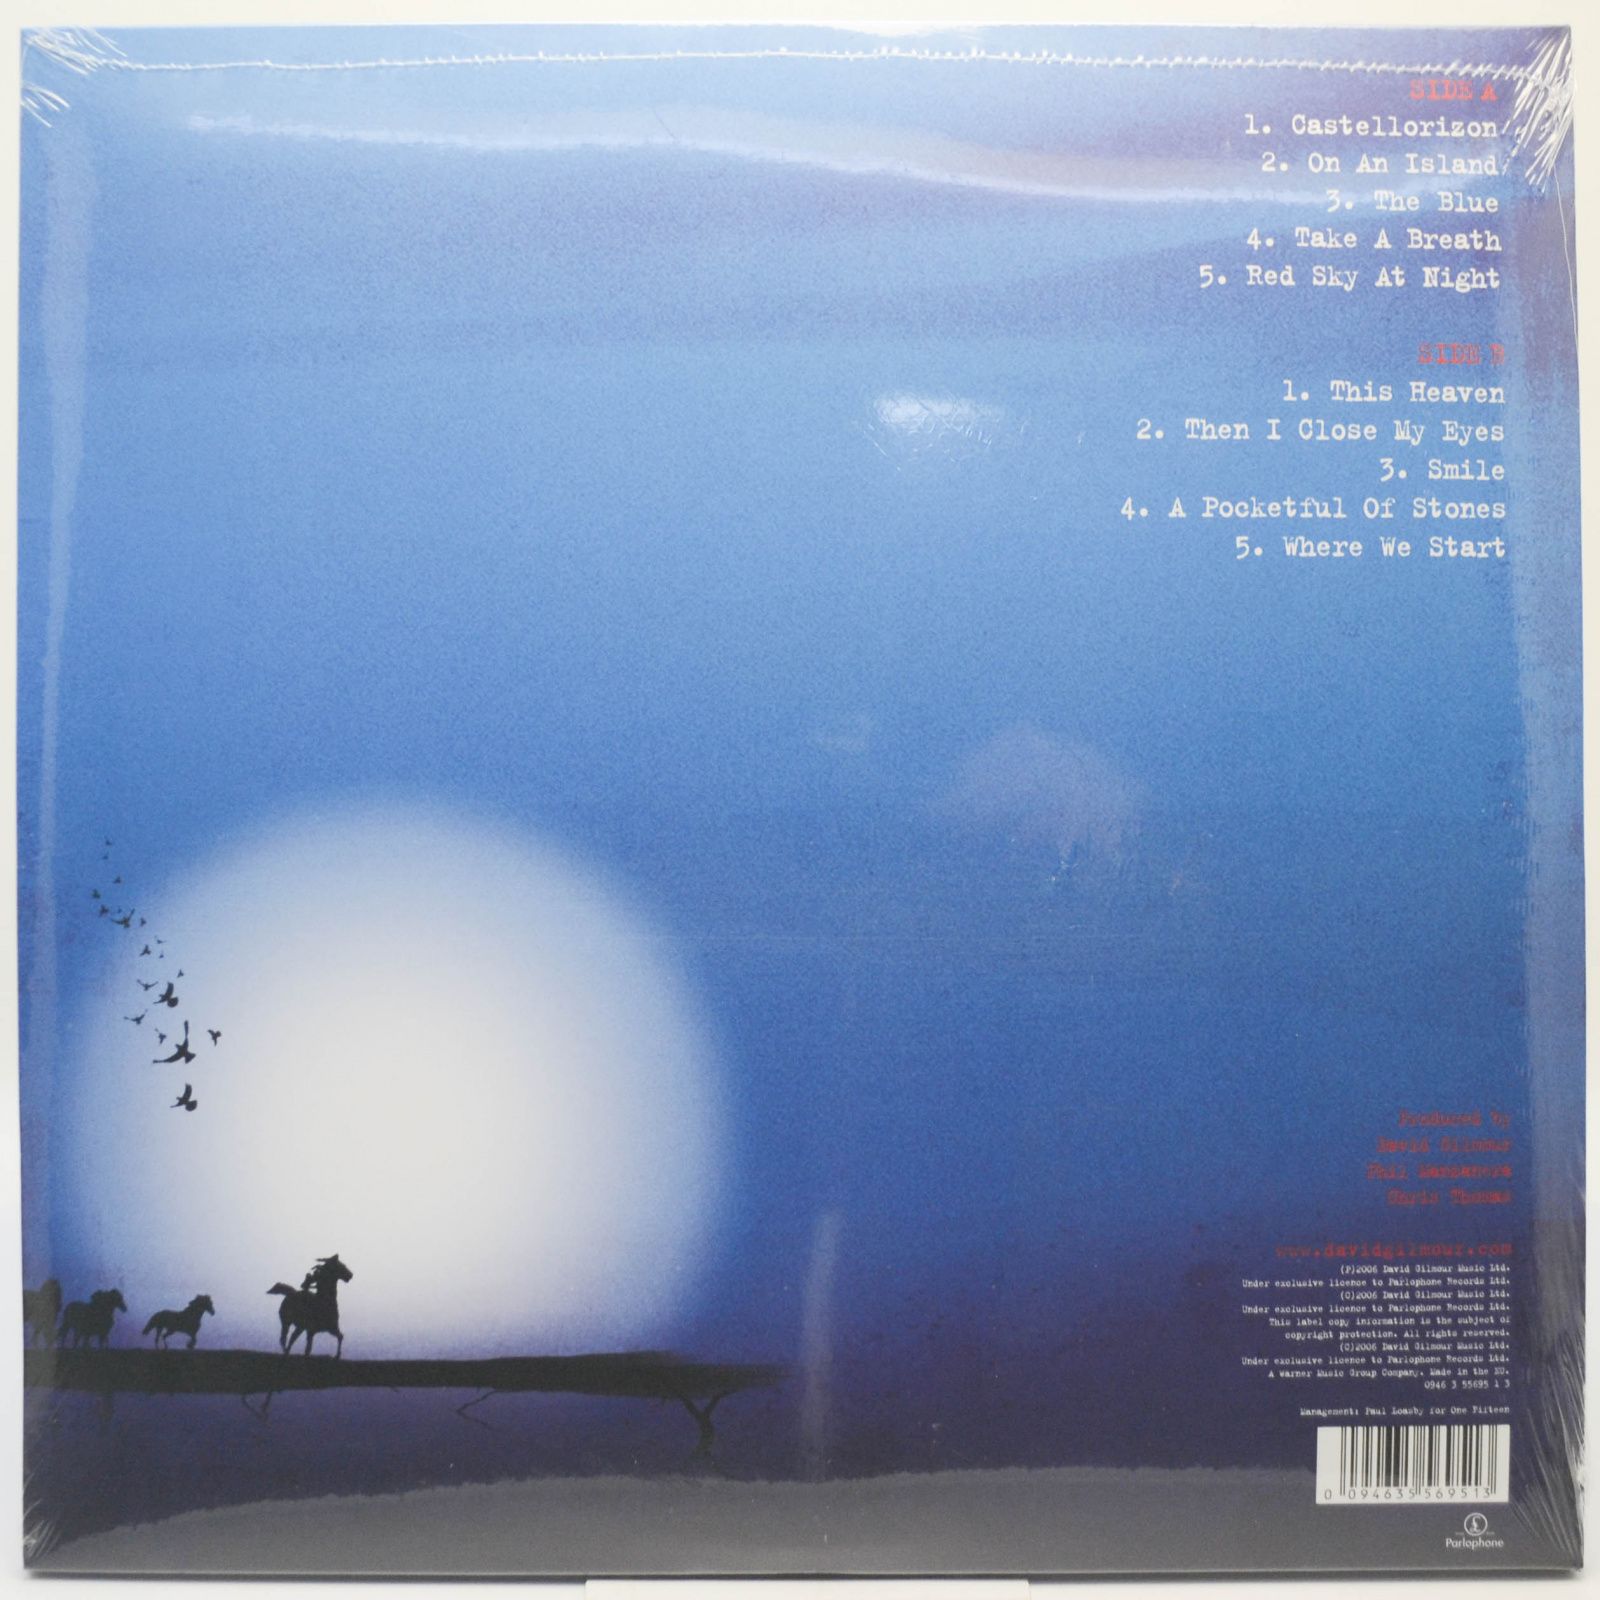 David Gilmour — On An Island, 2006